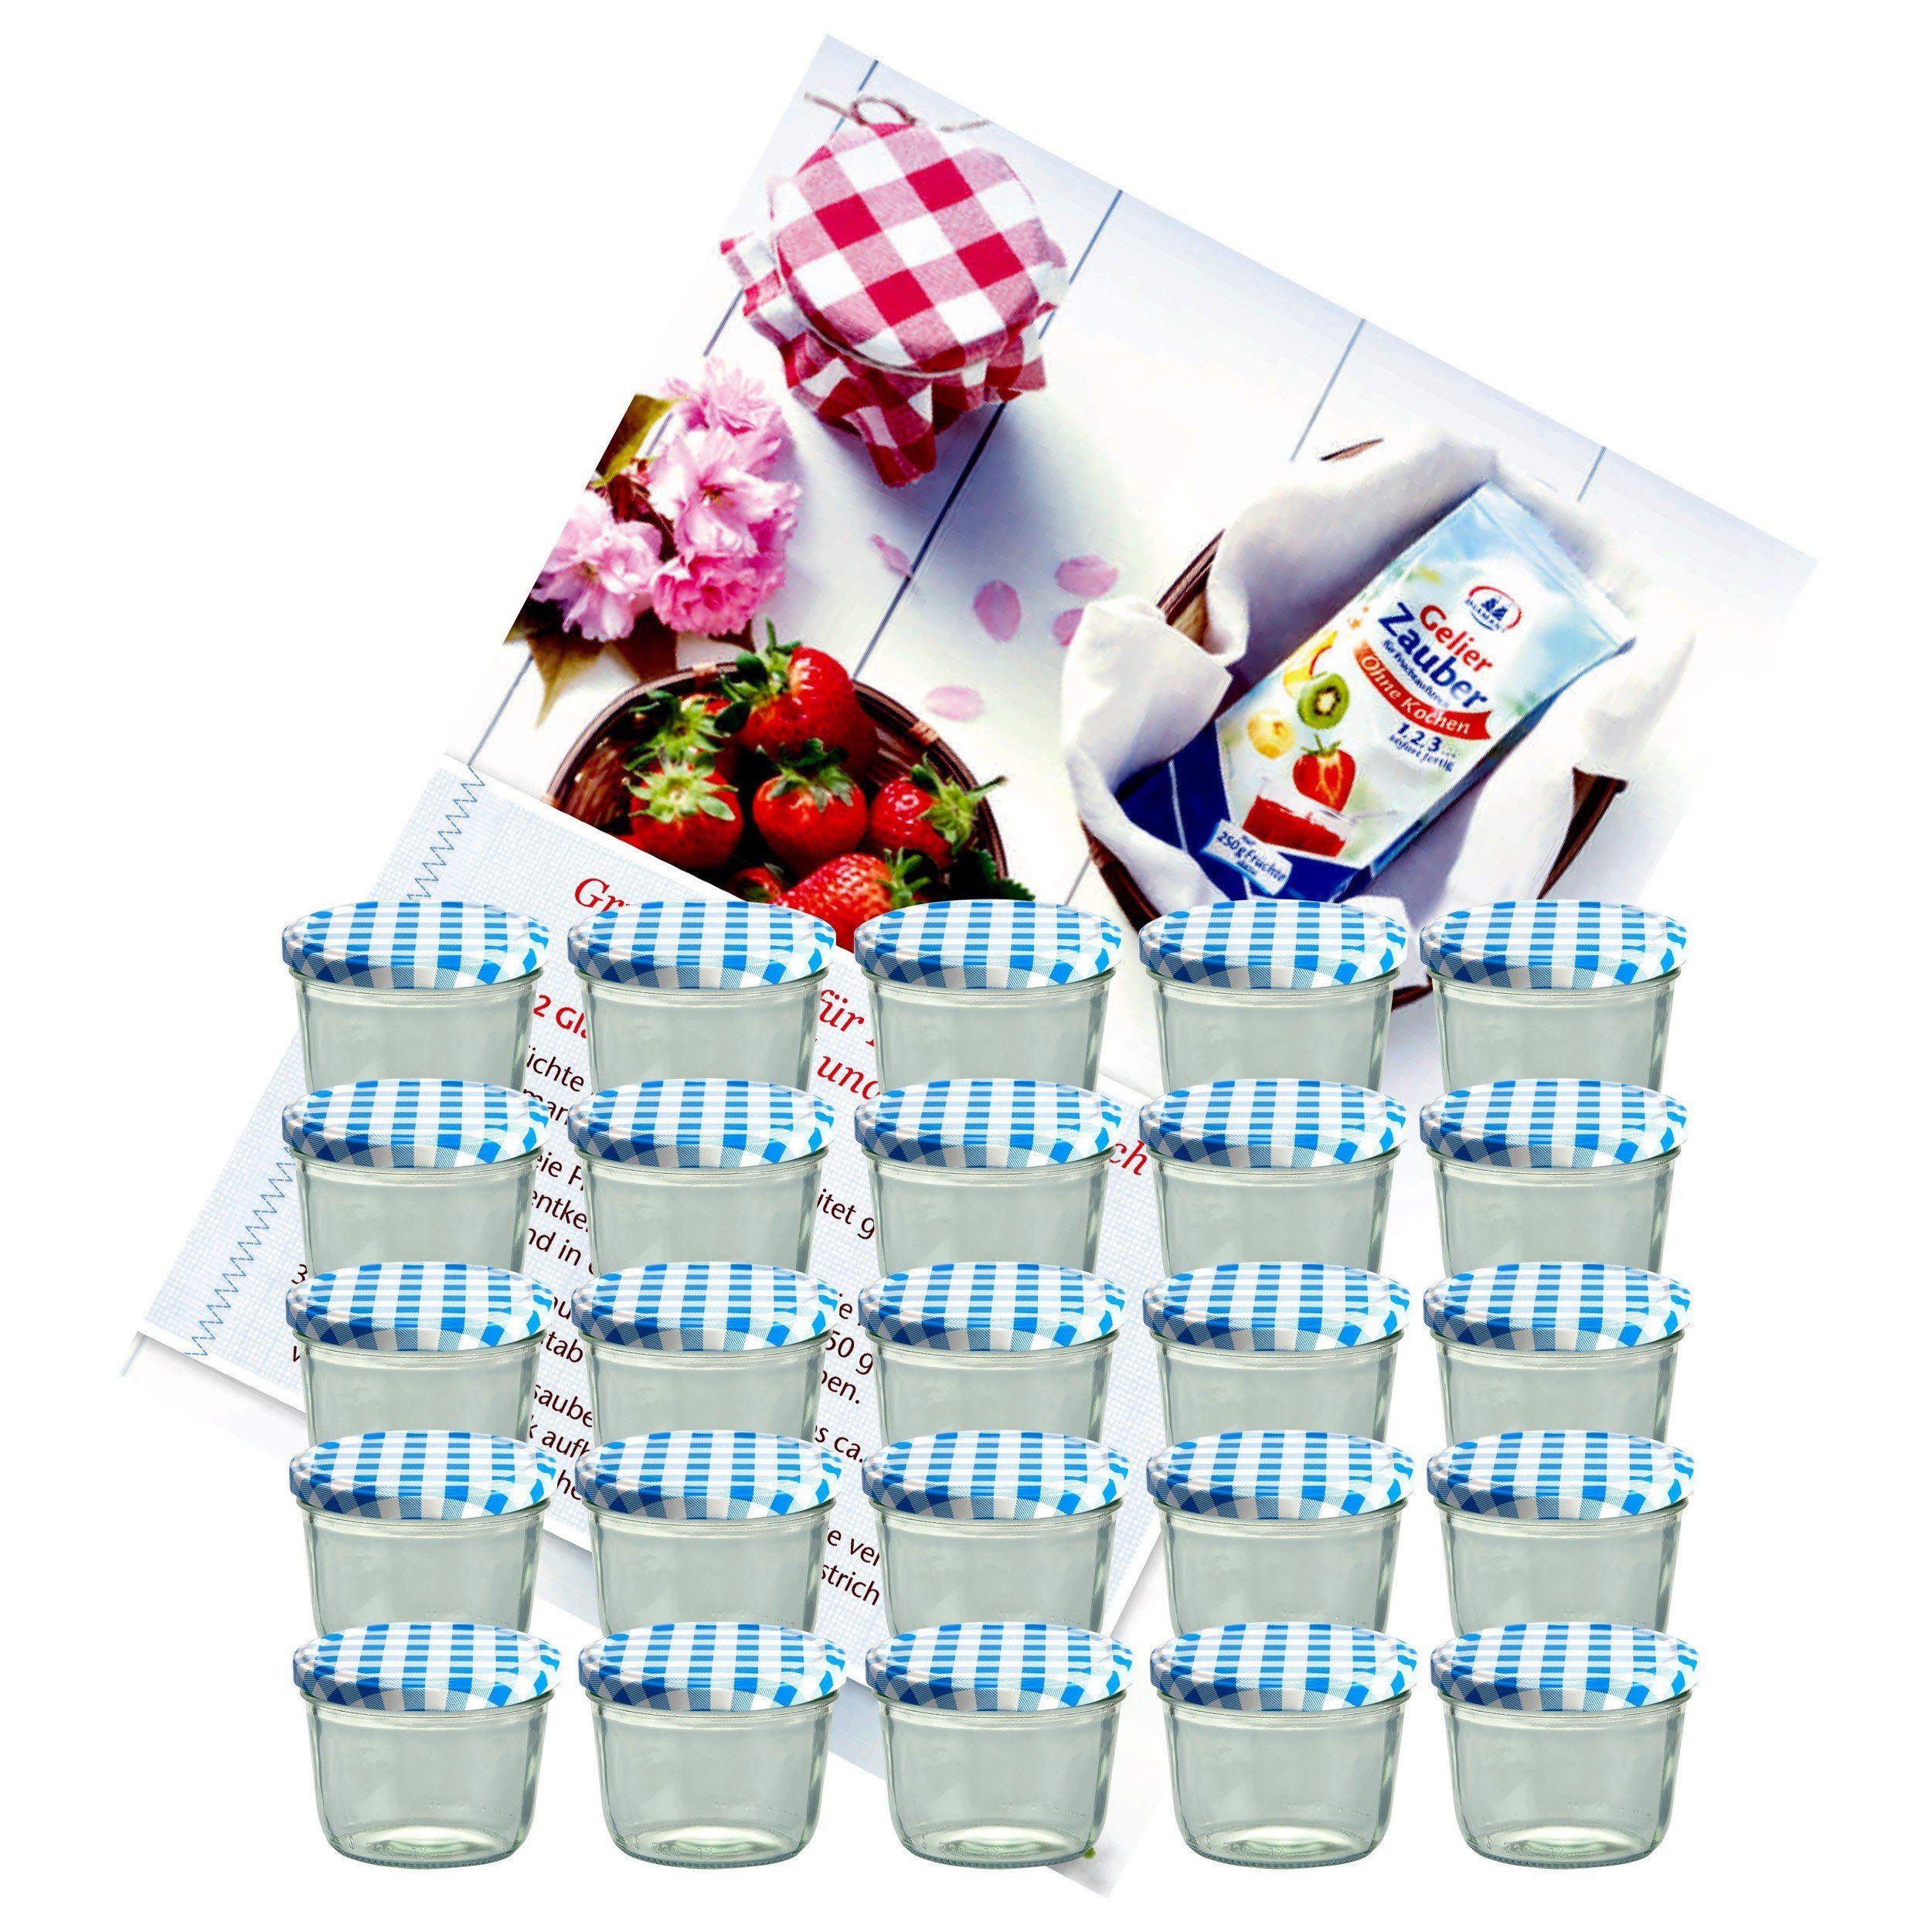 MamboCat Einmachglas 25er Set Sturzglas 230 ml Marmeladenglas To 82 blau karierter Deckel, Glas